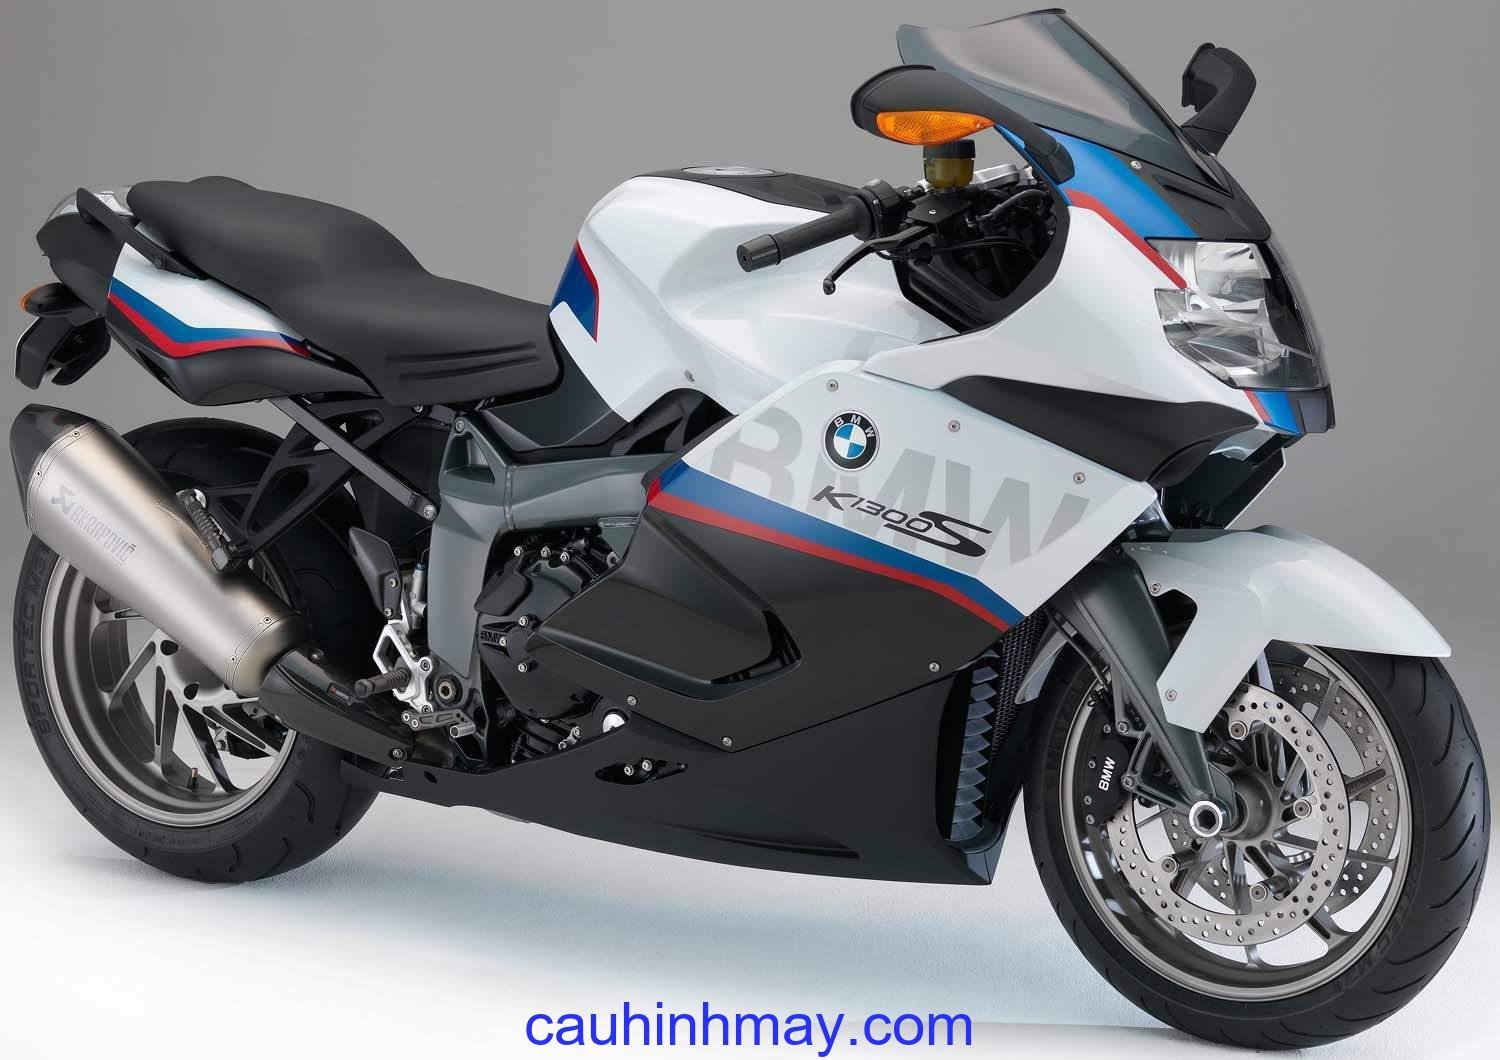 BMW K 1300 S MOTORSPORT SPECIAL EDITION - cauhinhmay.com